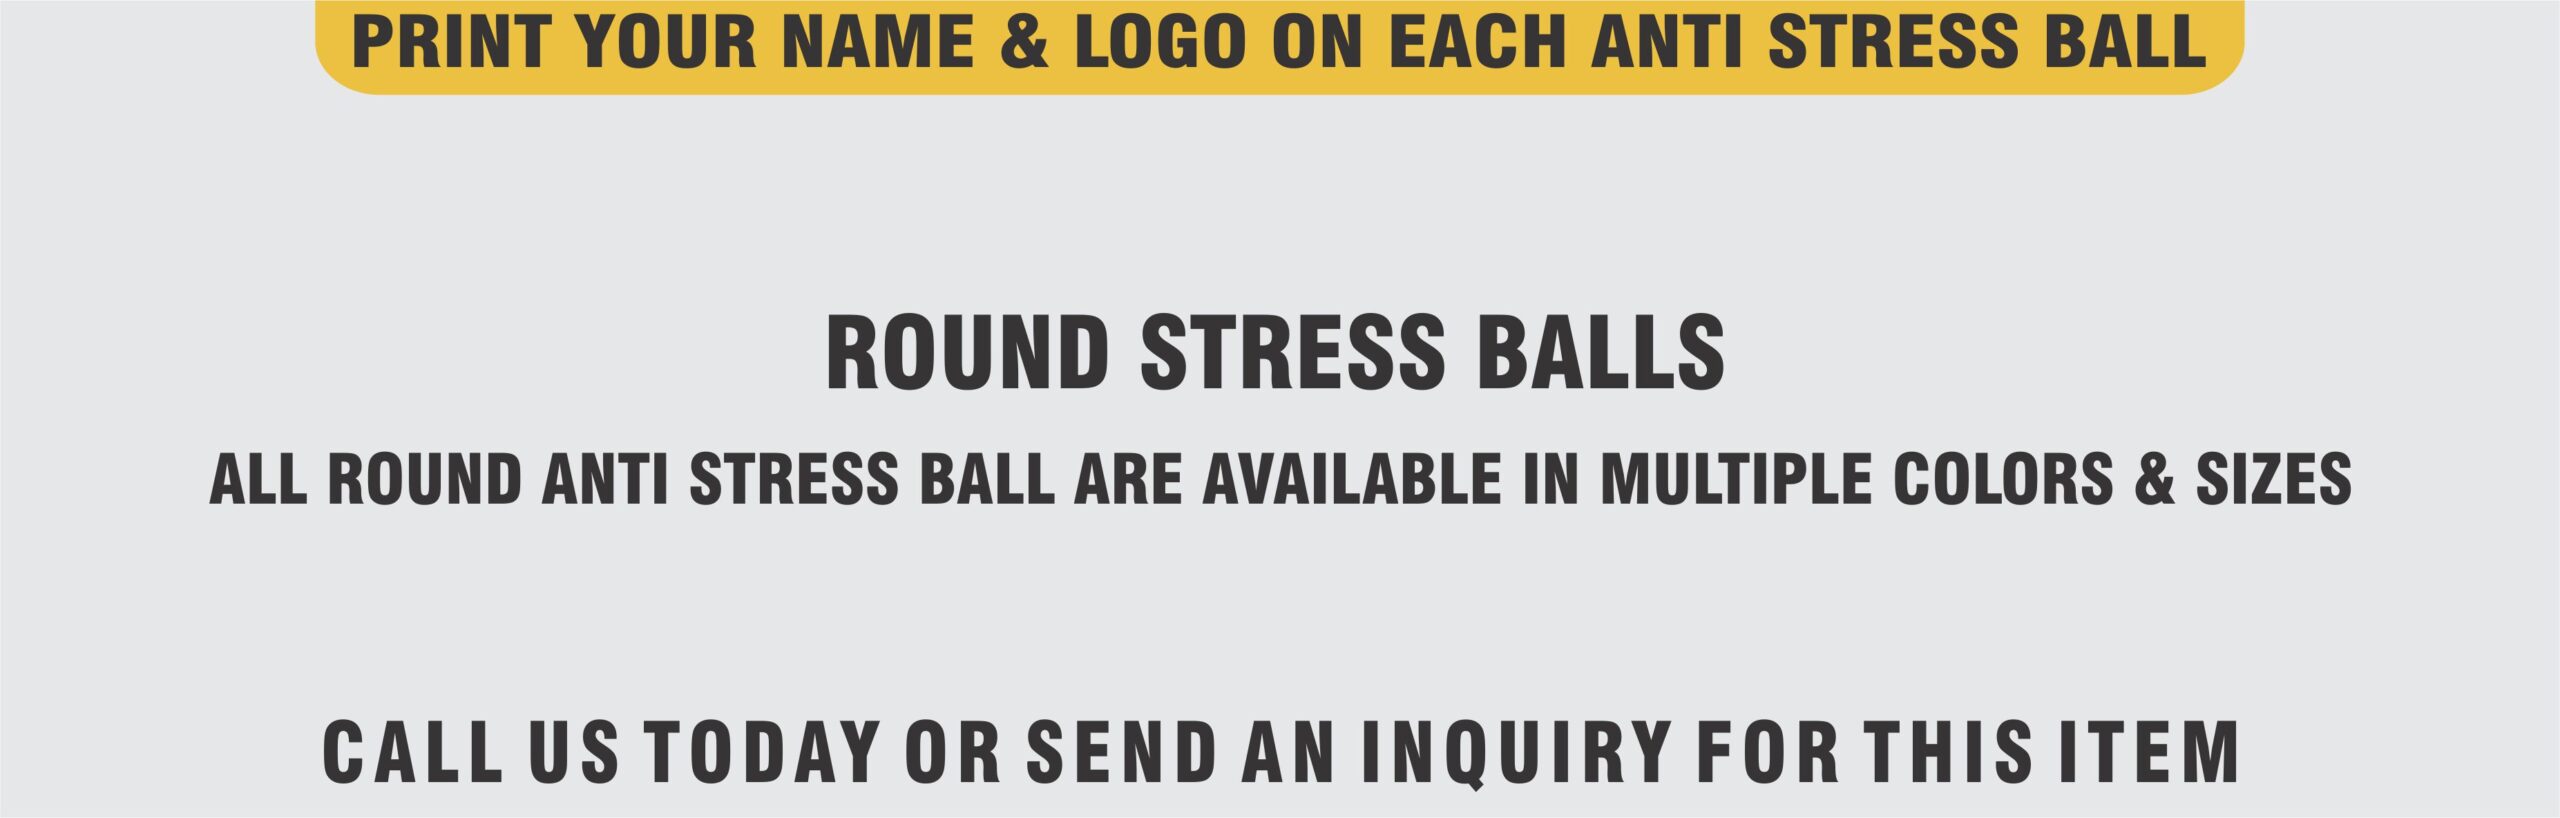 Round Stress Balls, Color Round Stress balls Supplier in Dubai